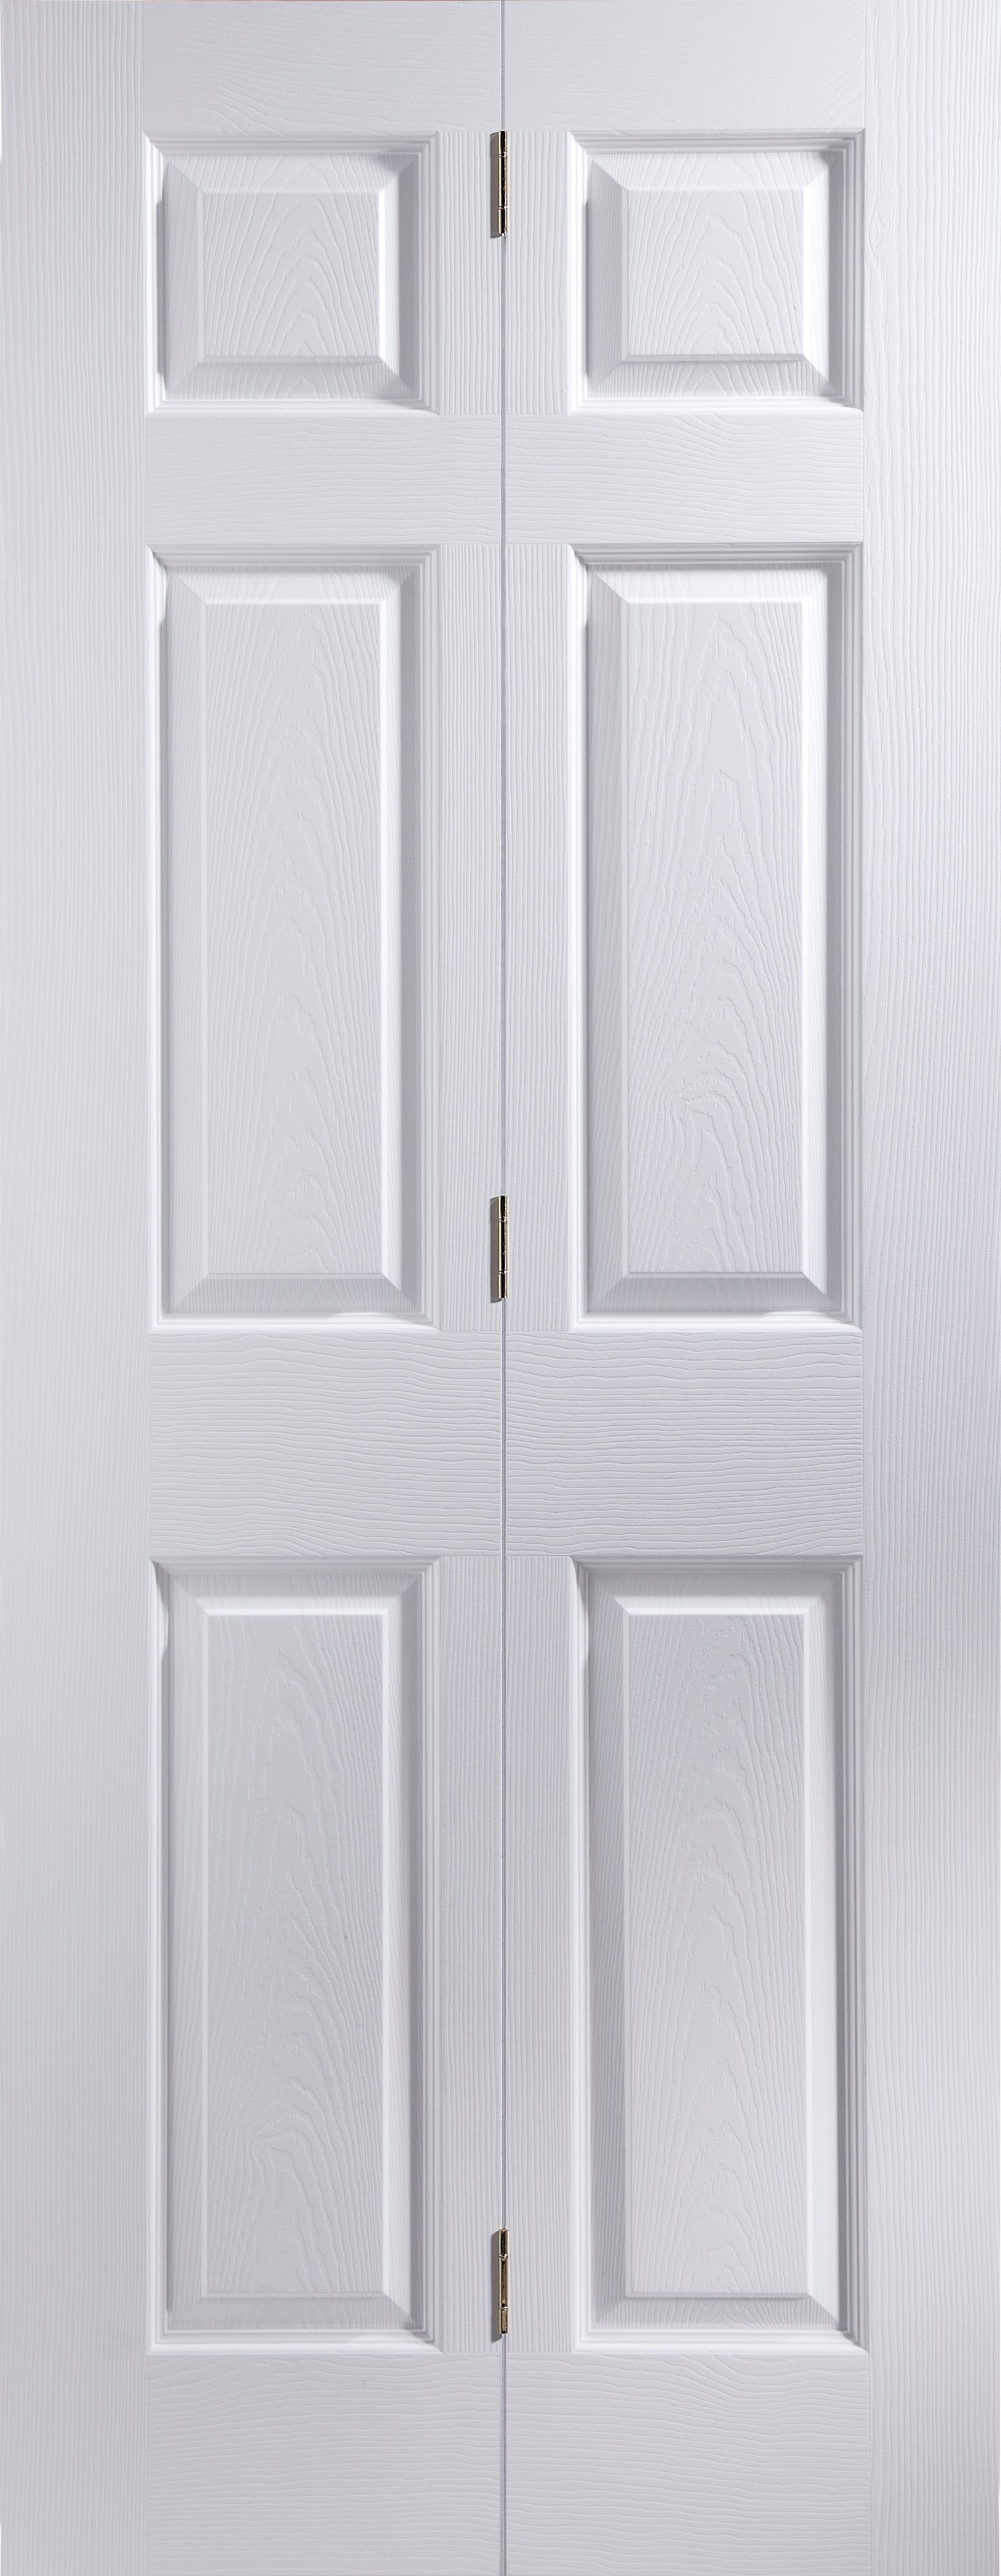 6 Panel Primed White Woodgrain Effect Internal Bi Fold Door Set H 1981mm W 762mm Departments Diy At B Q